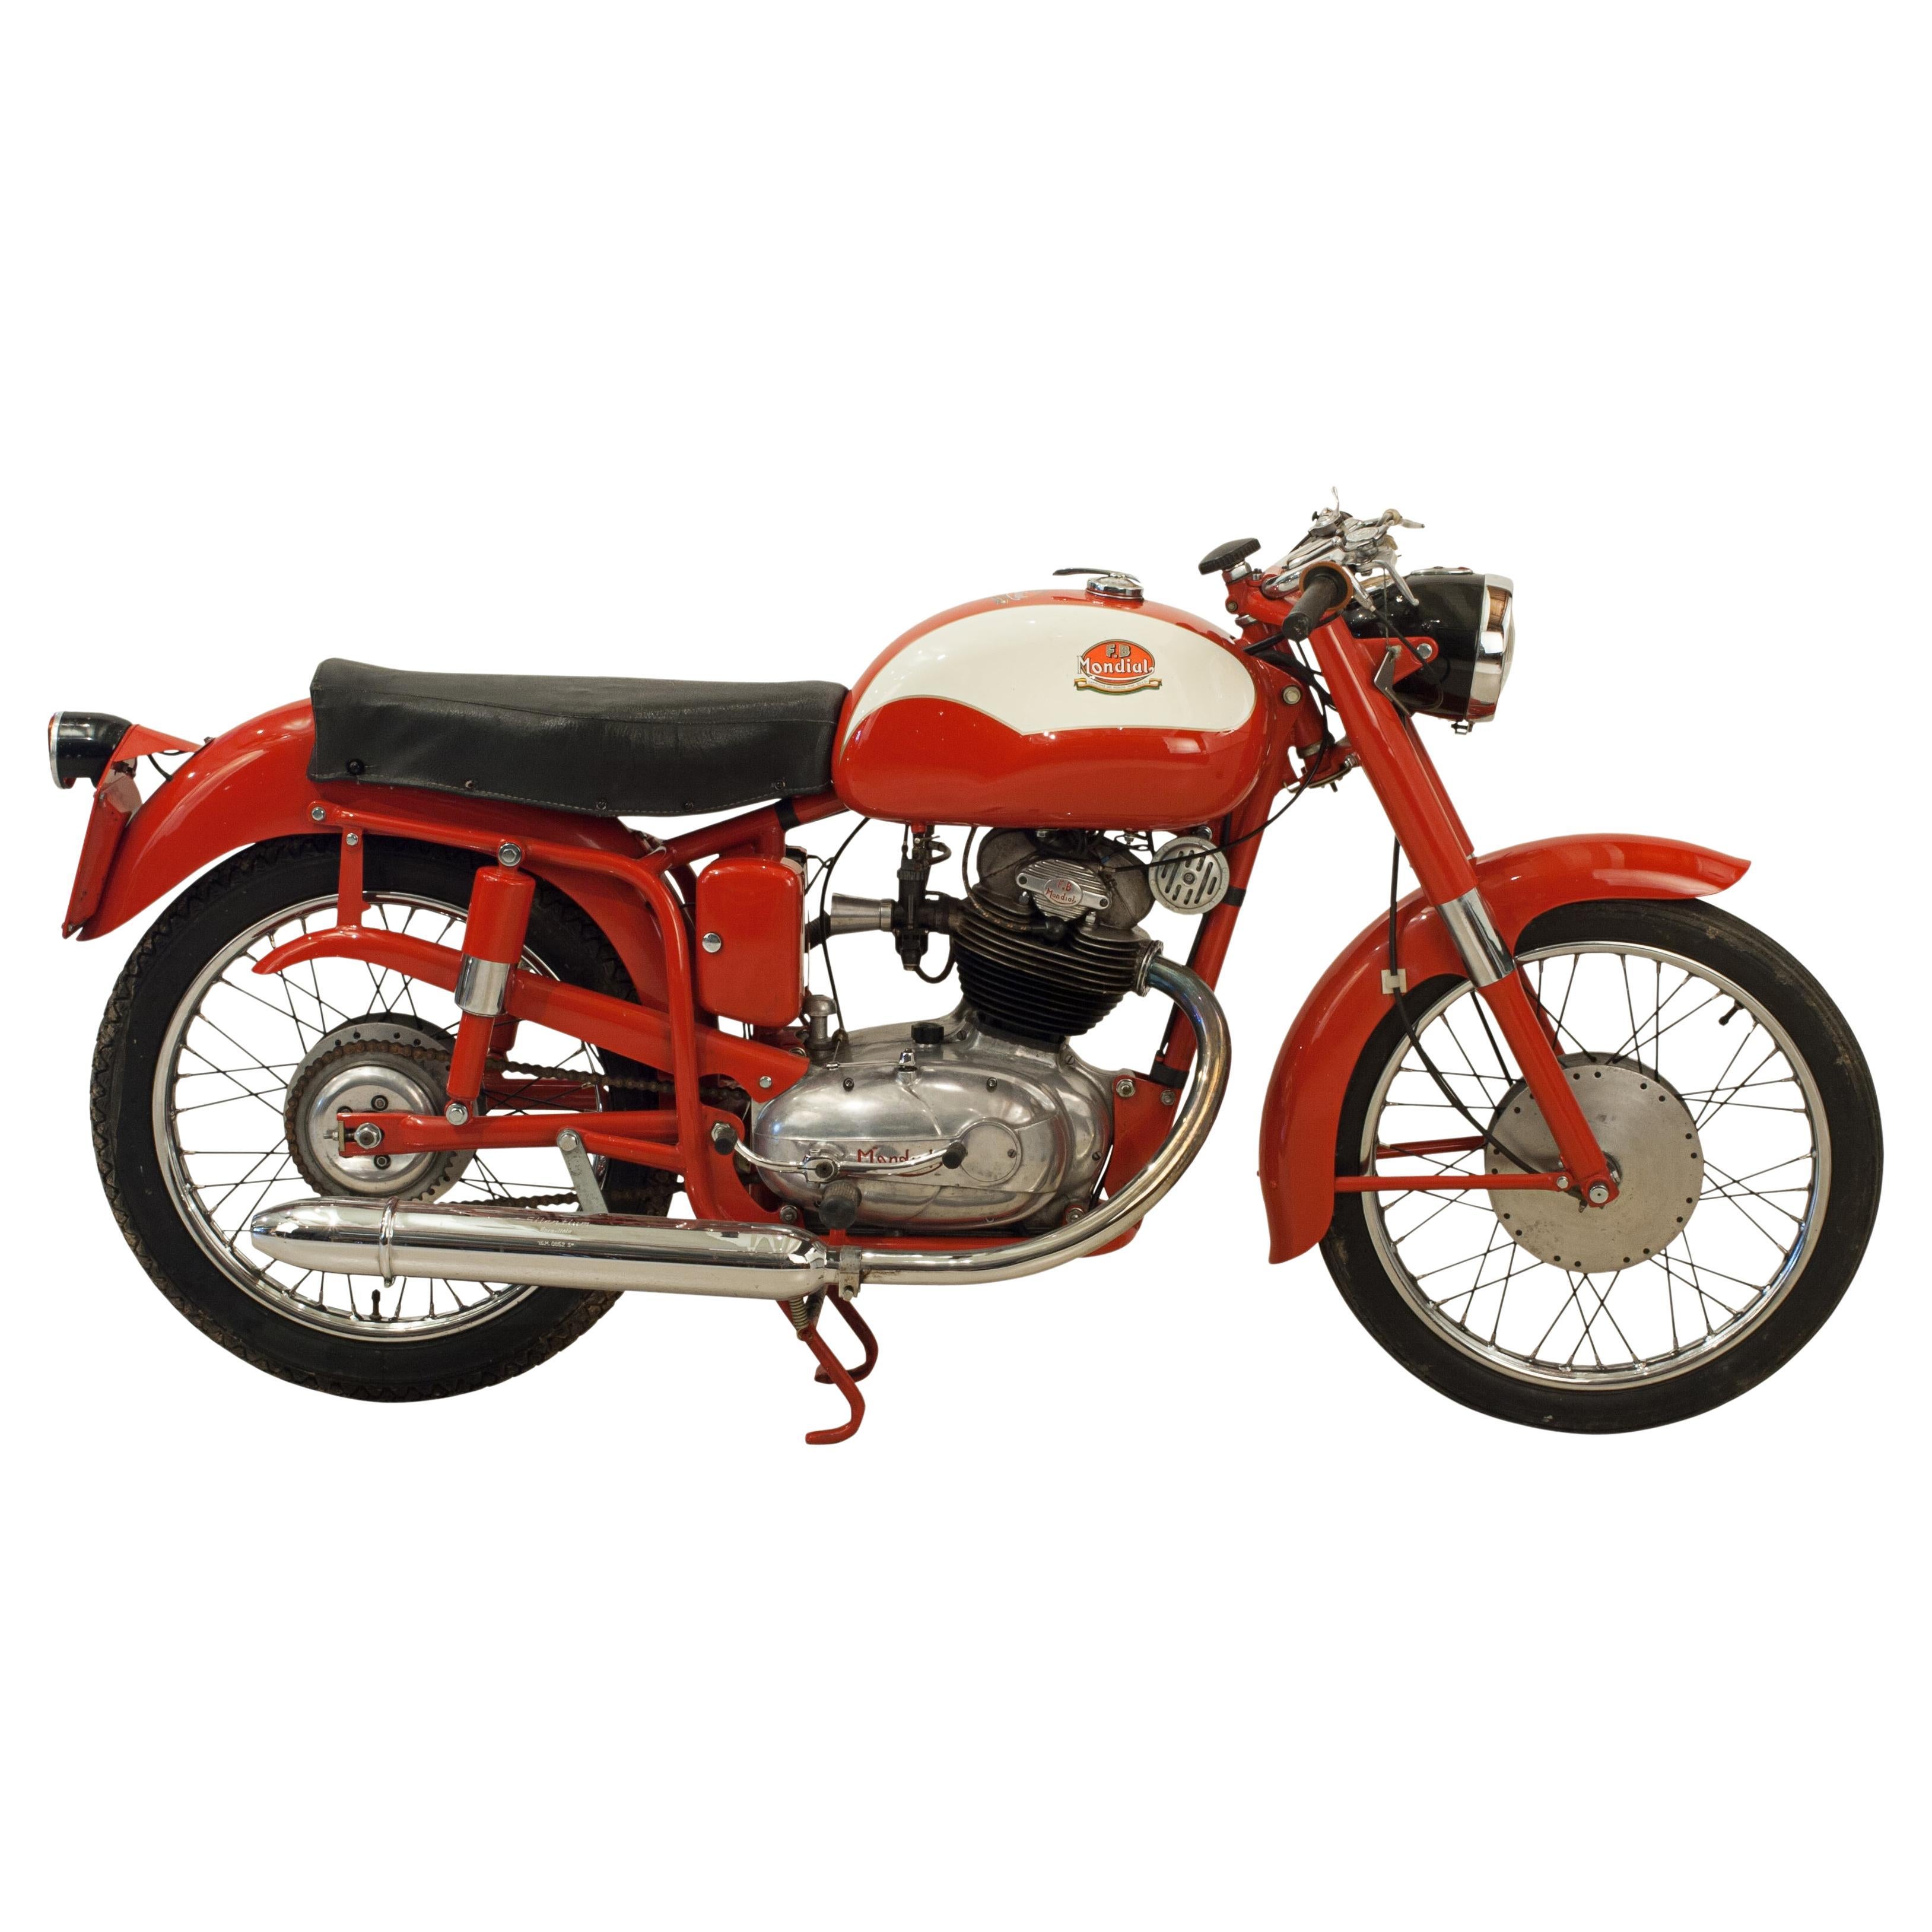 Italian Motorcycle, Mondial 1960 Sprint, Classic Motorbike. For Sale